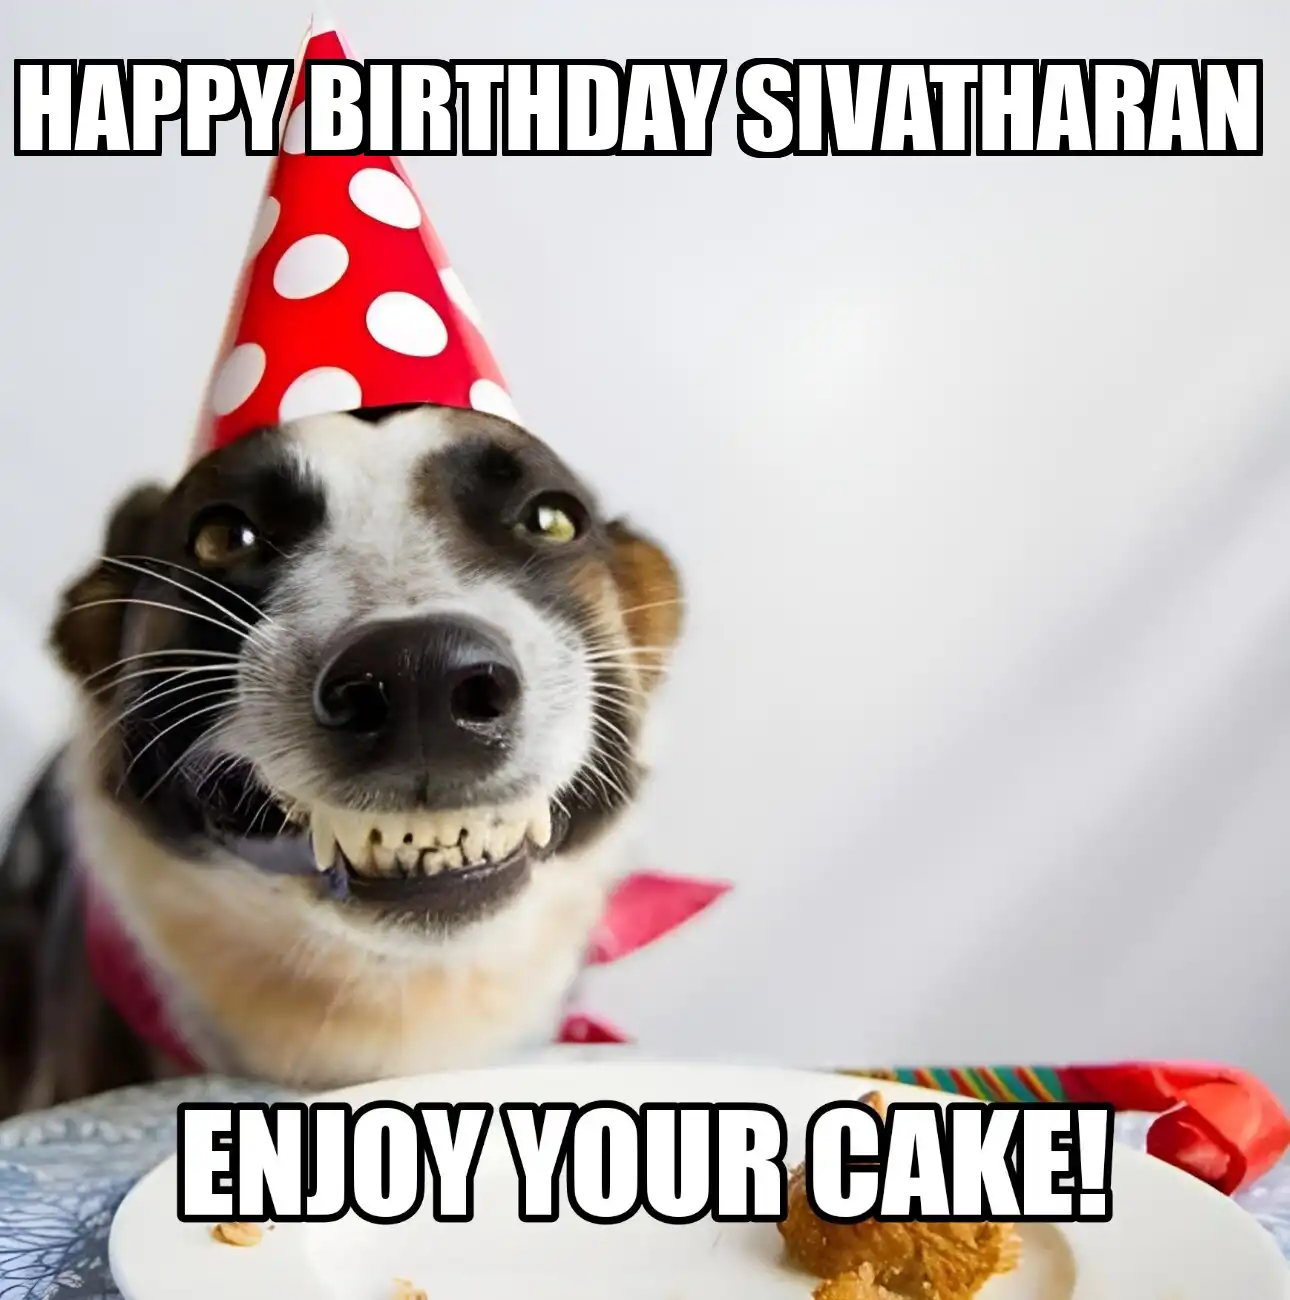 Happy Birthday Sivatharan Enjoy Your Cake Dog Meme